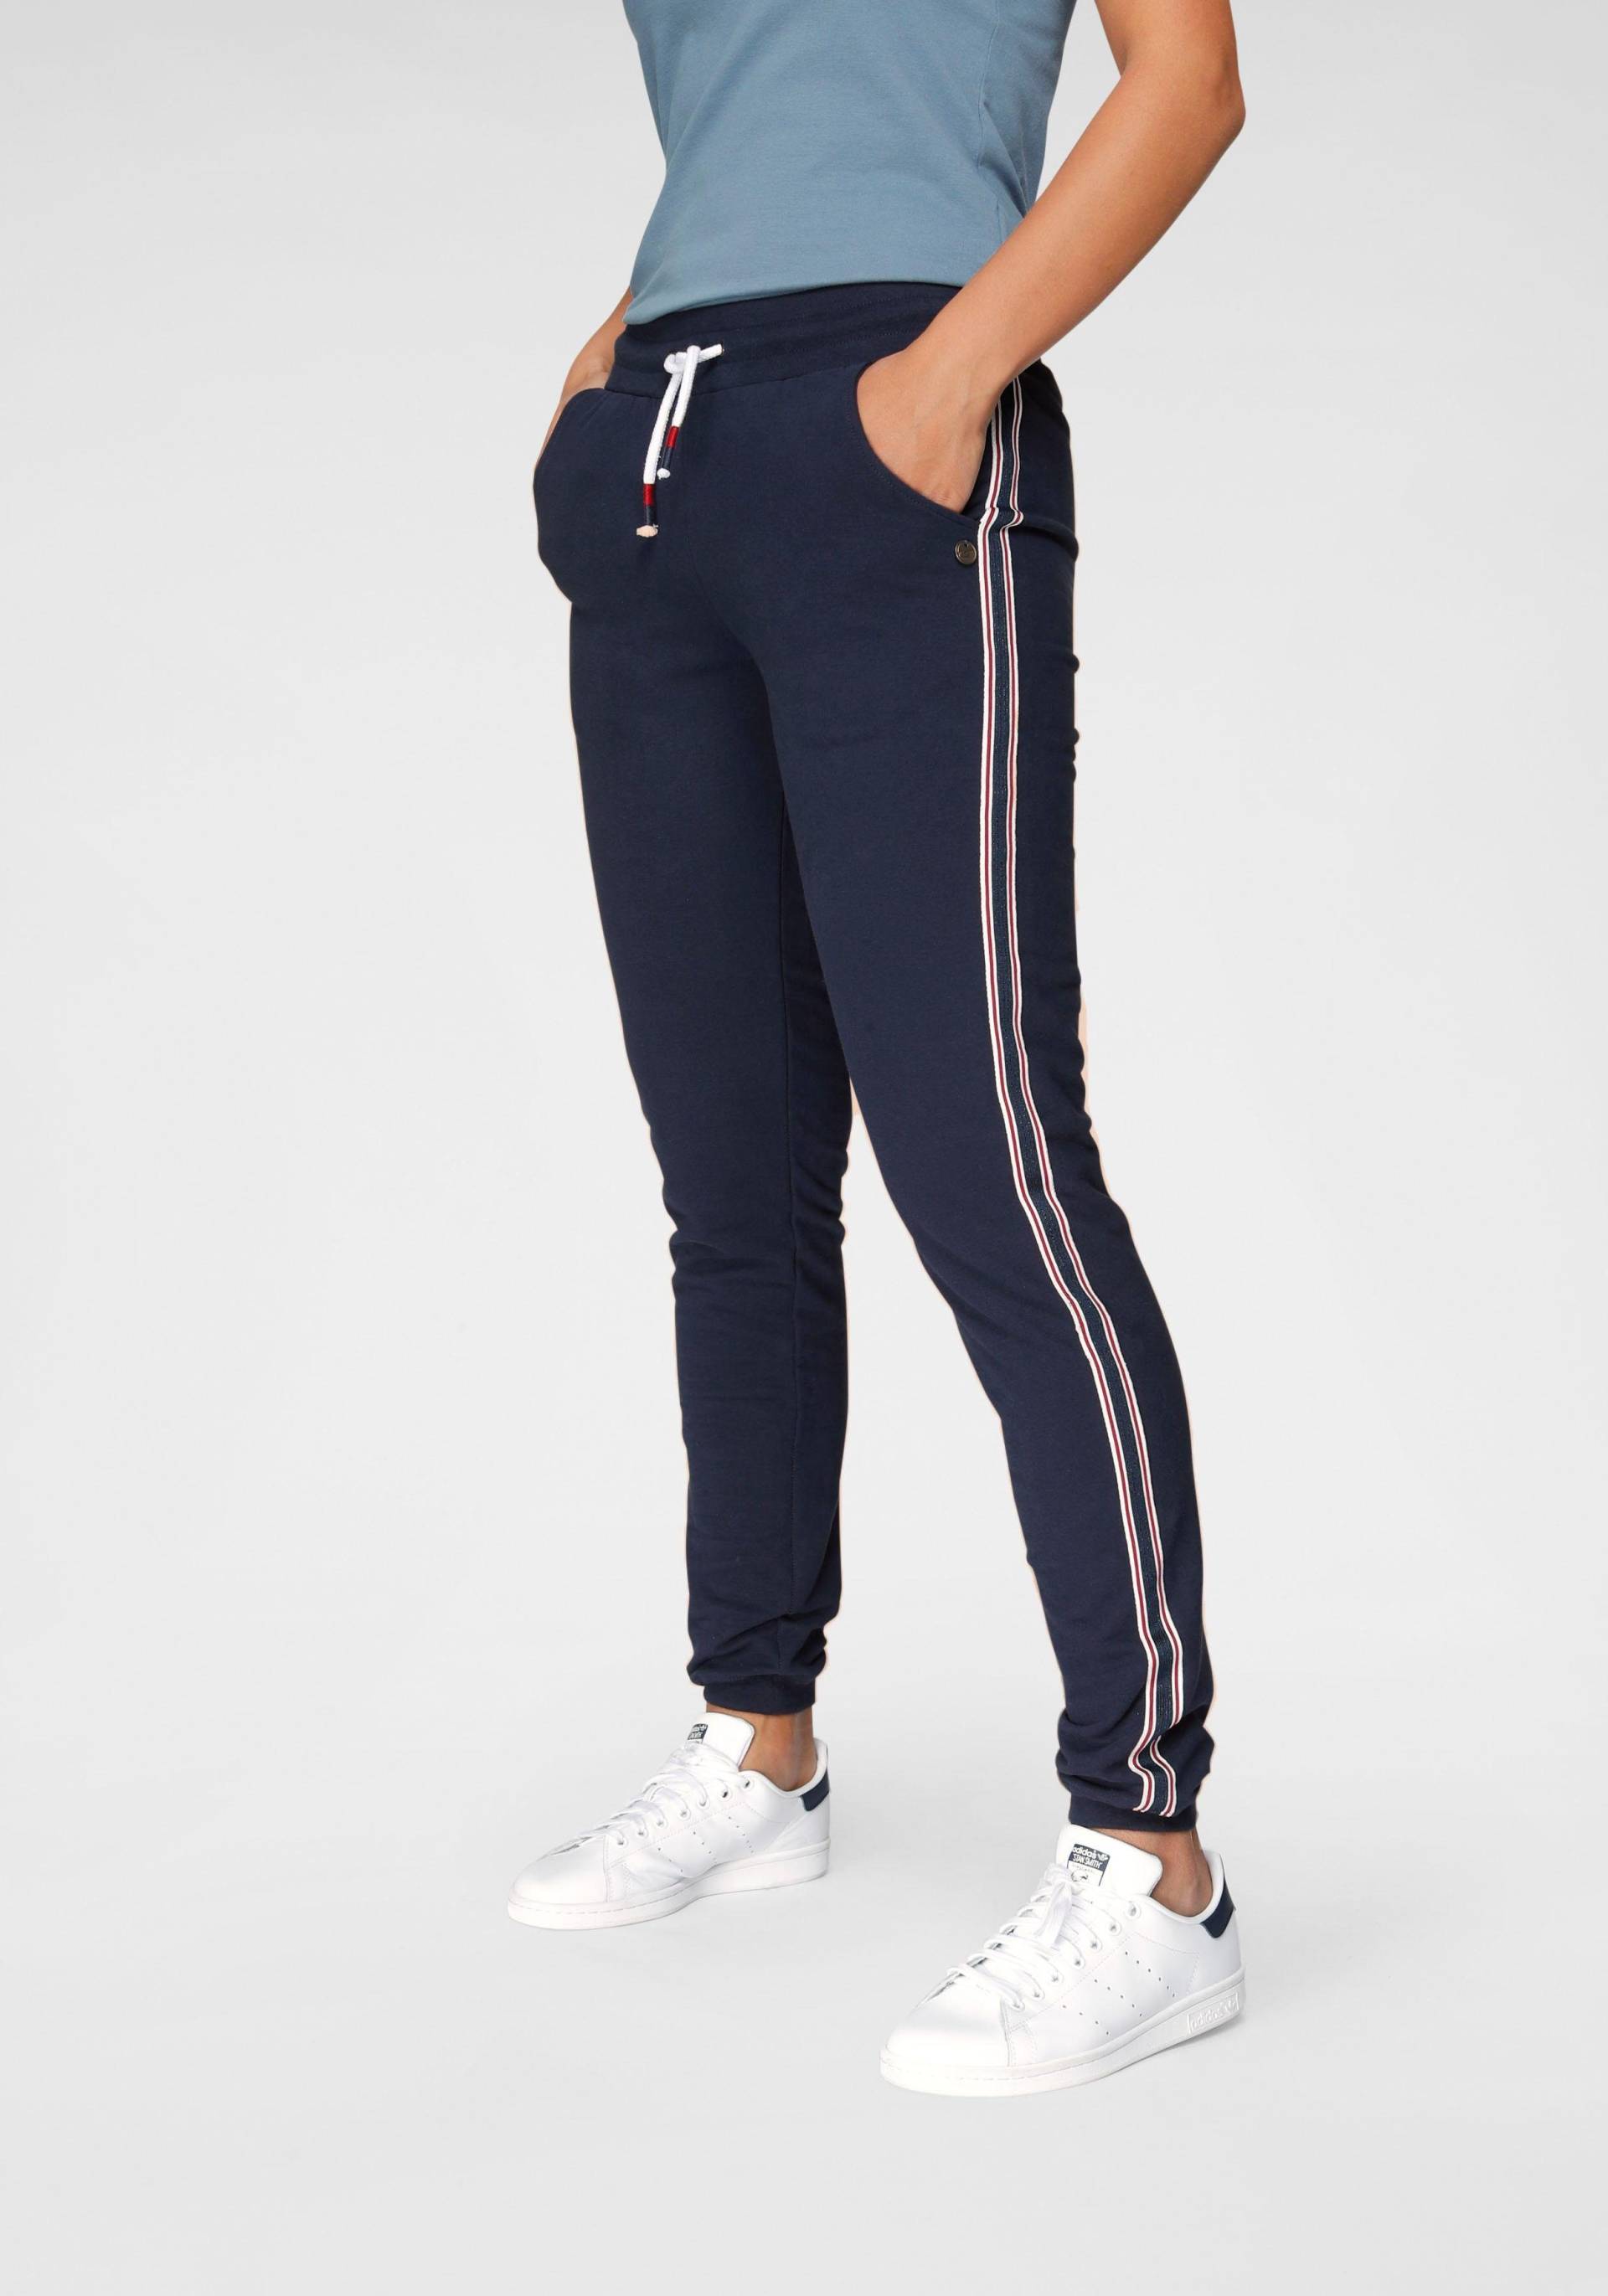 Ocean Sportswear Jogginghose »Slim Fit«, mit Tapestreifen von Ocean Sportswear